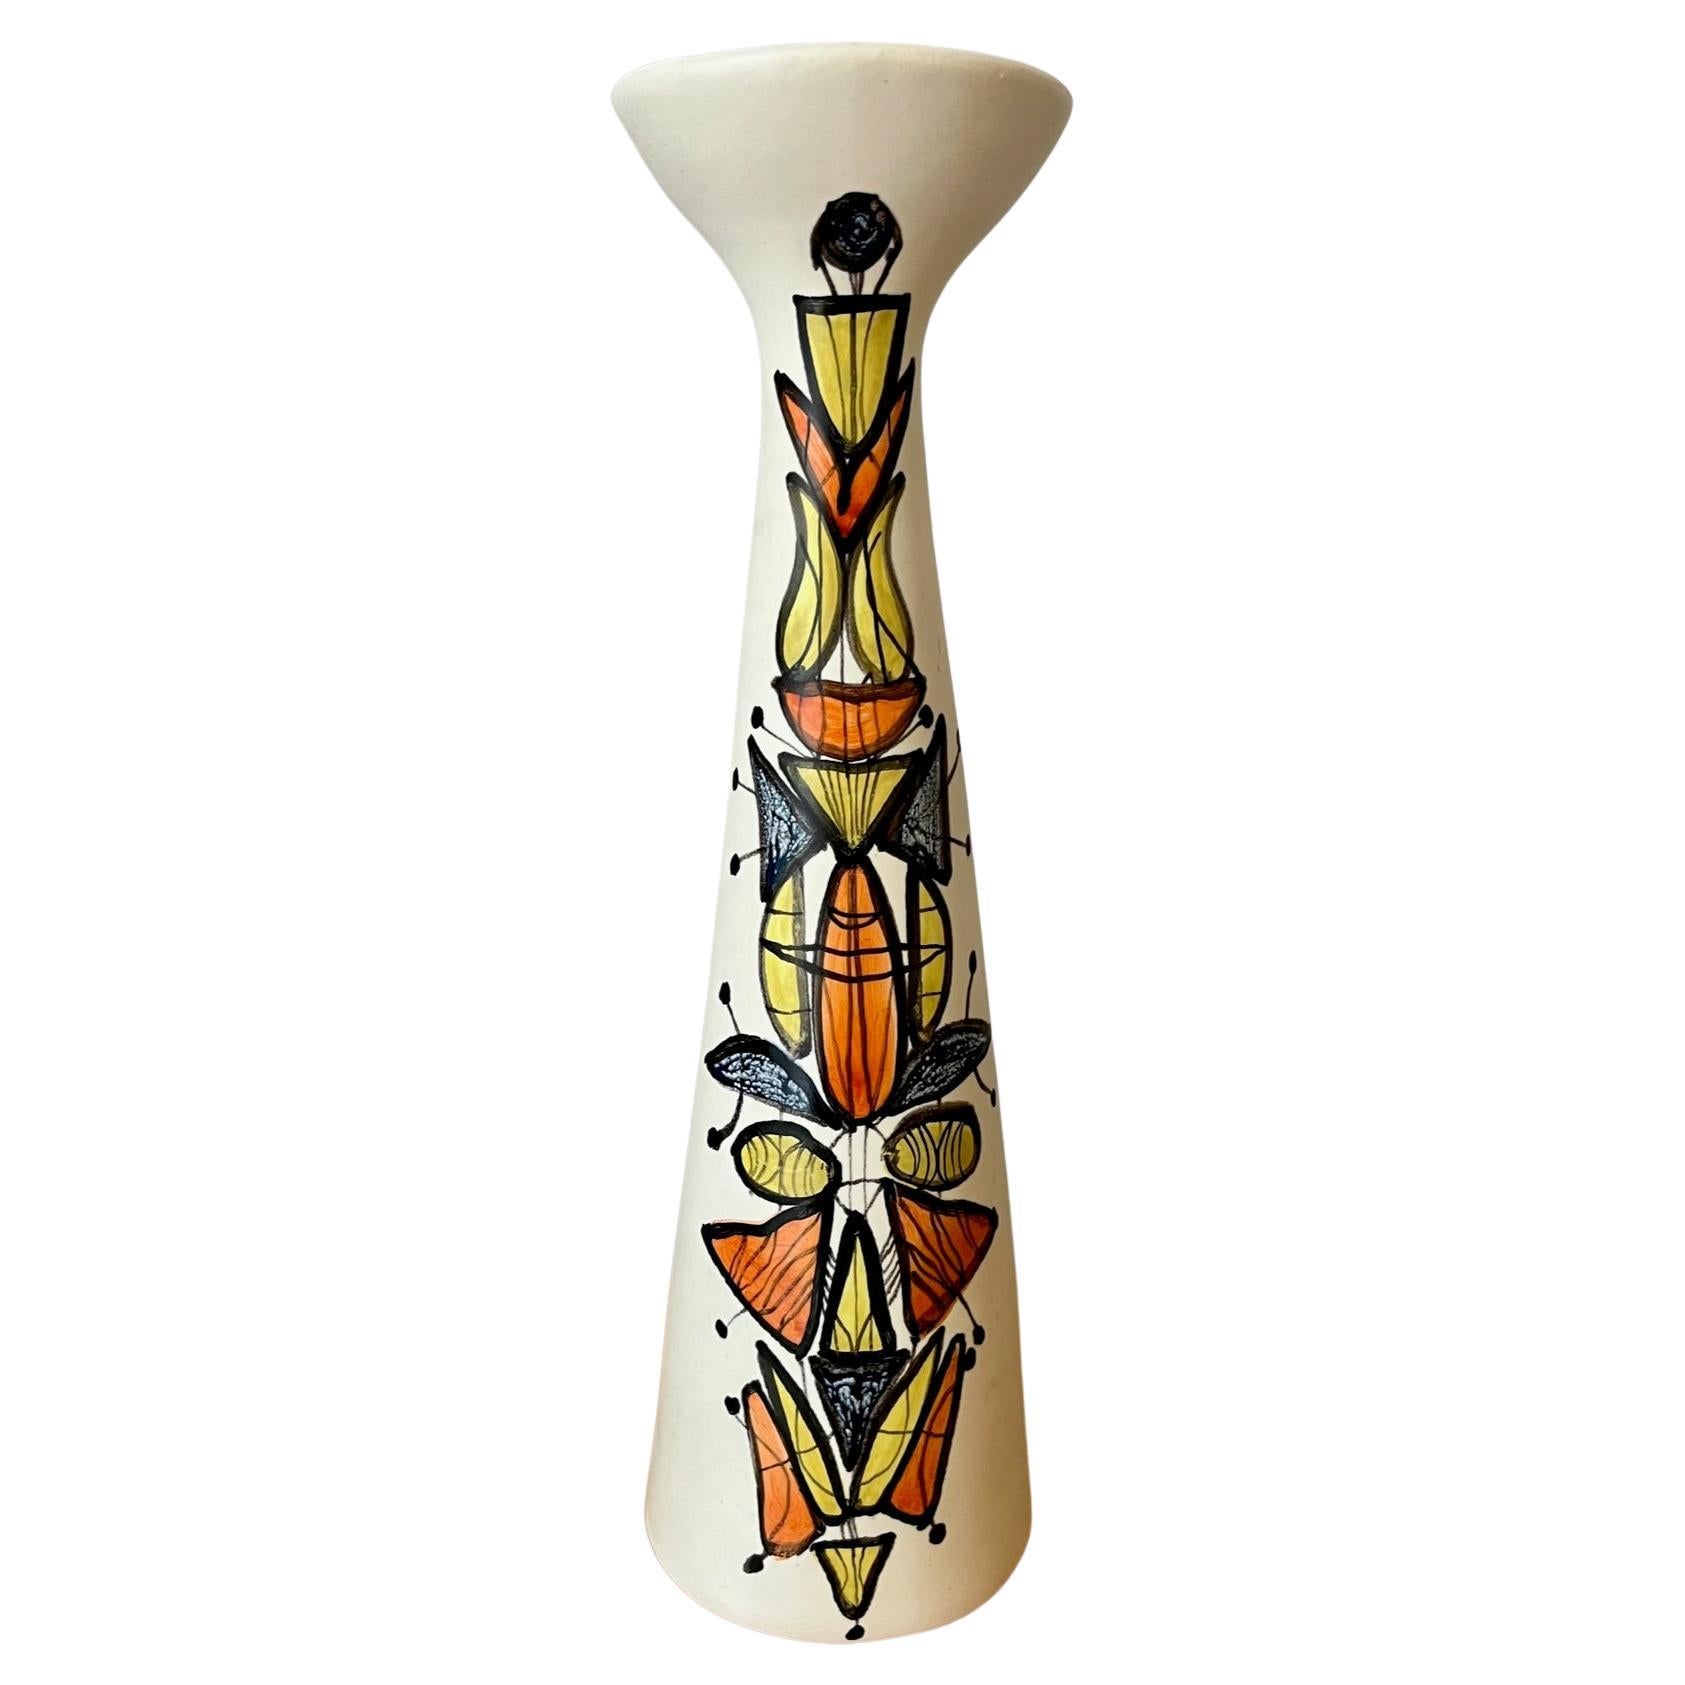 Glazed ceramic vase with polychrome decoration, Roger Capron.Vallauris.